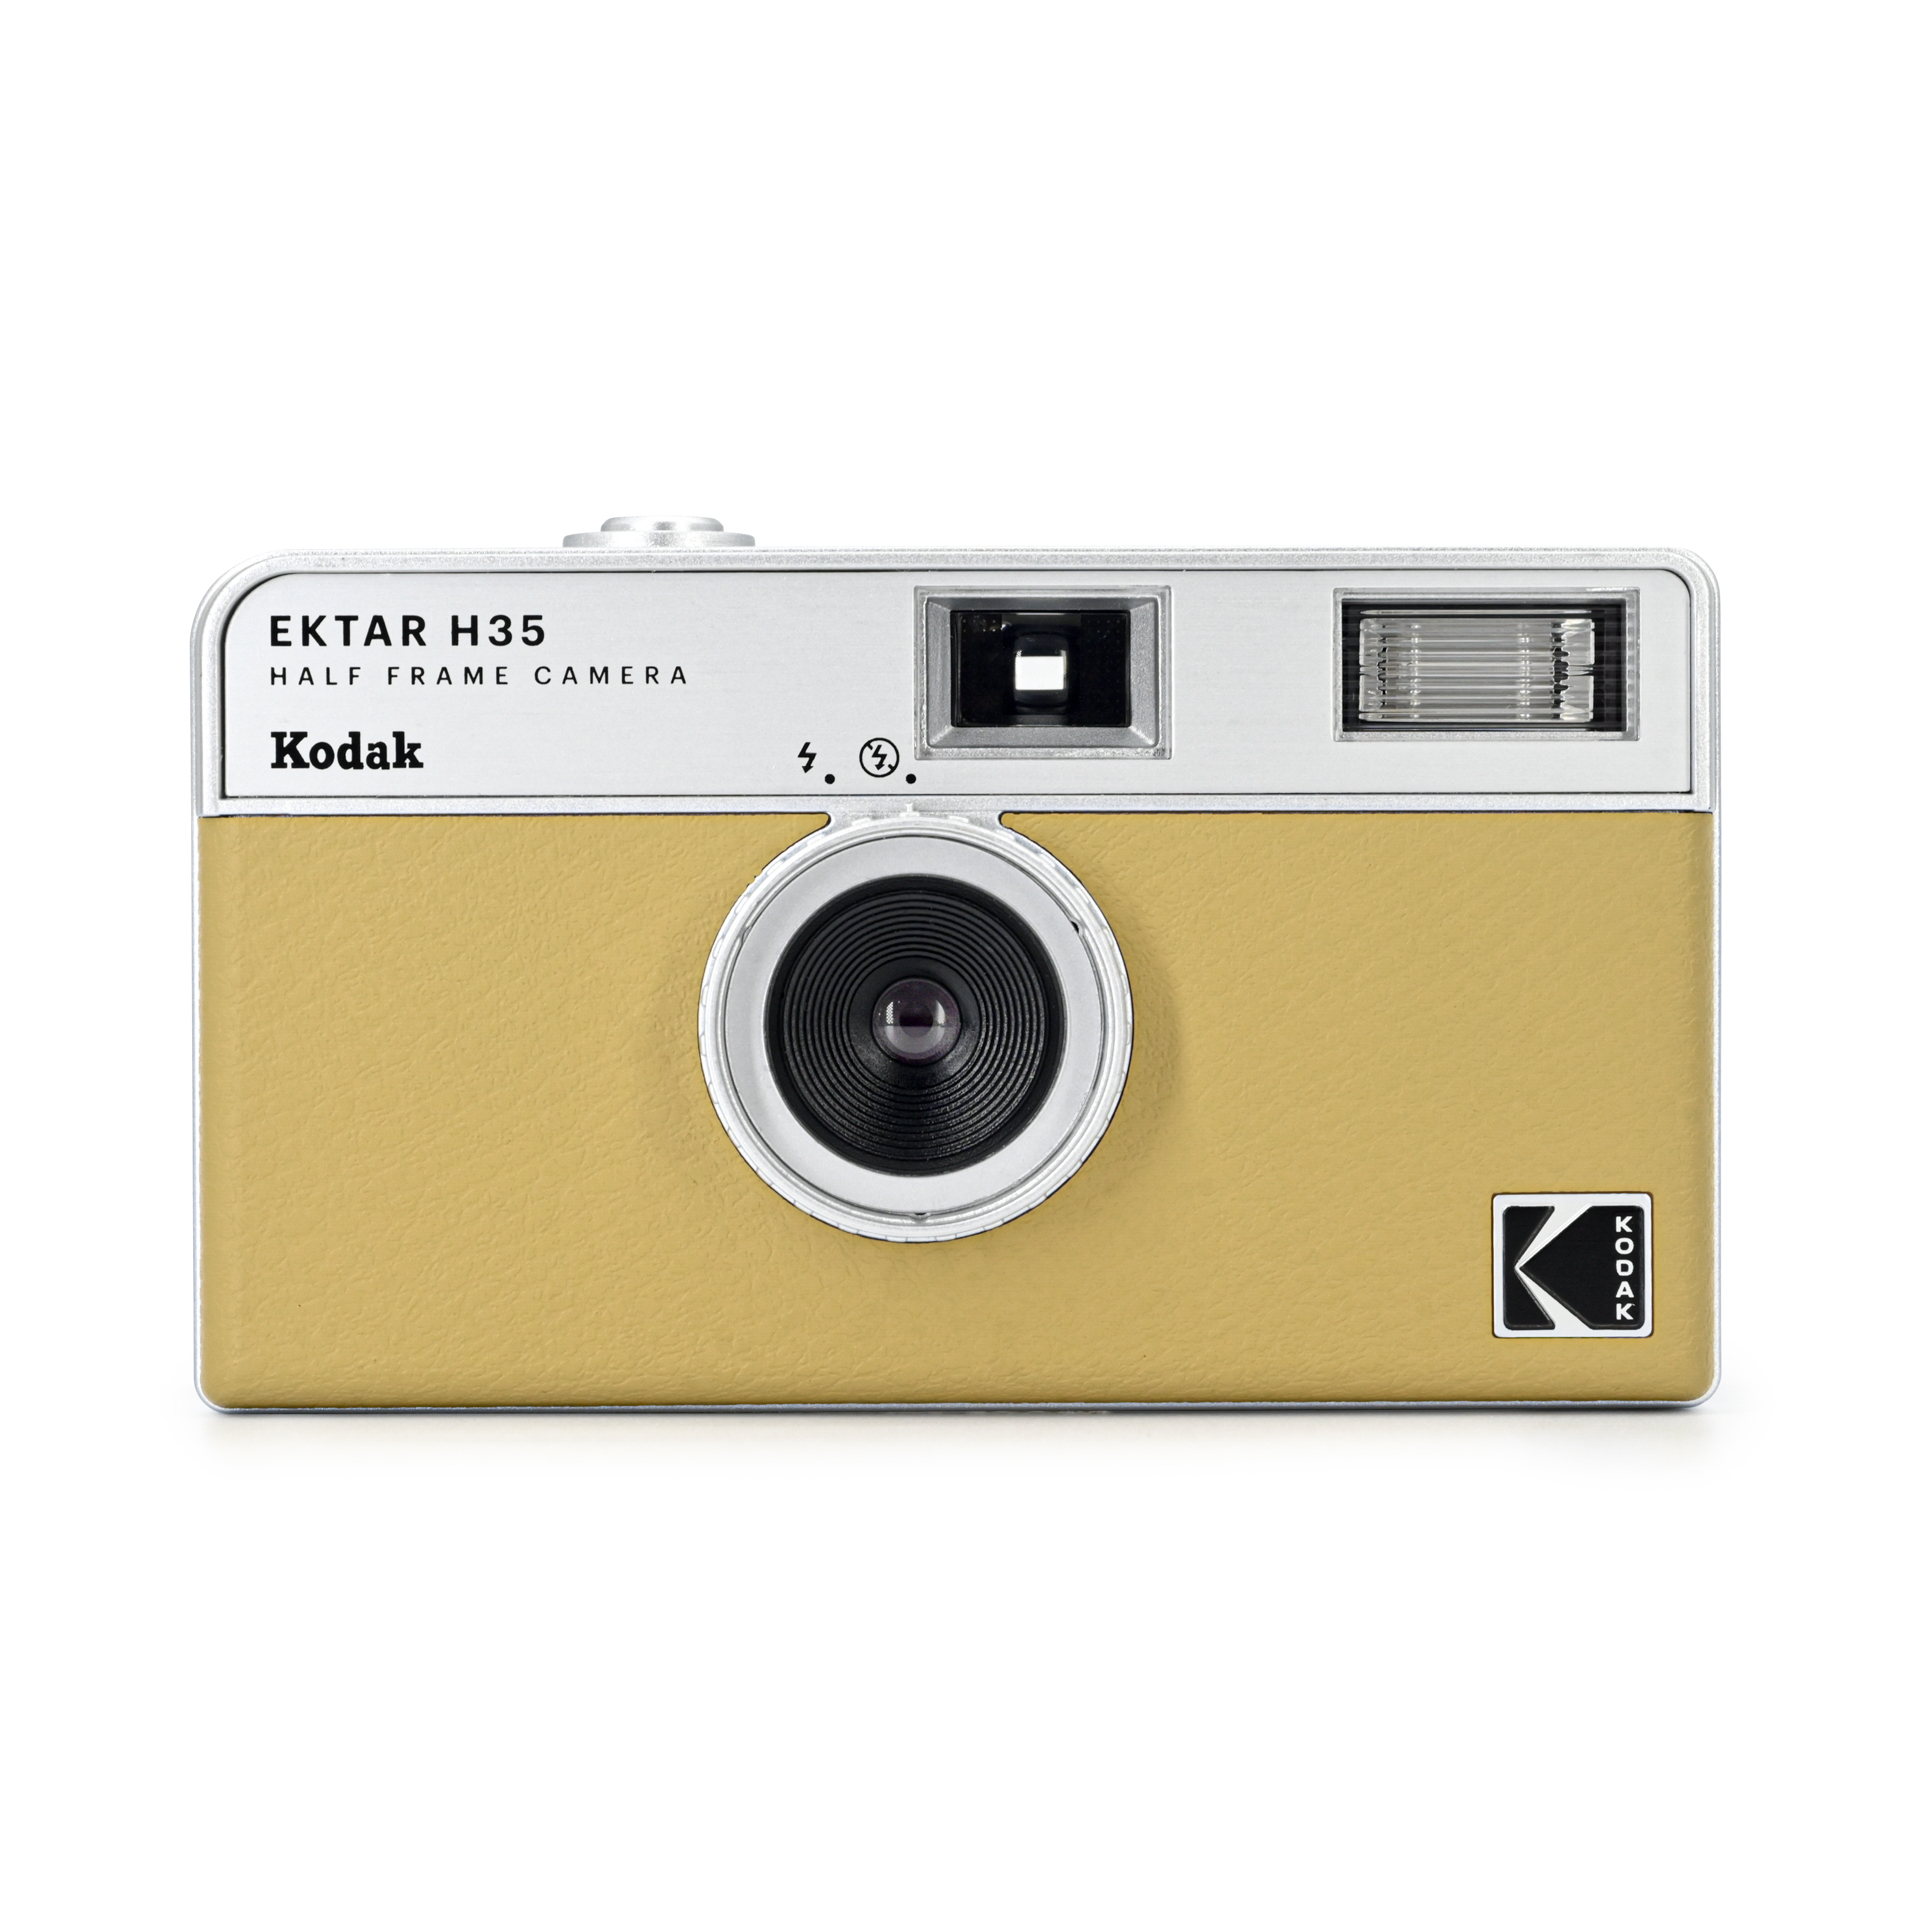 Kodak Ektar Halfframe Camera H35